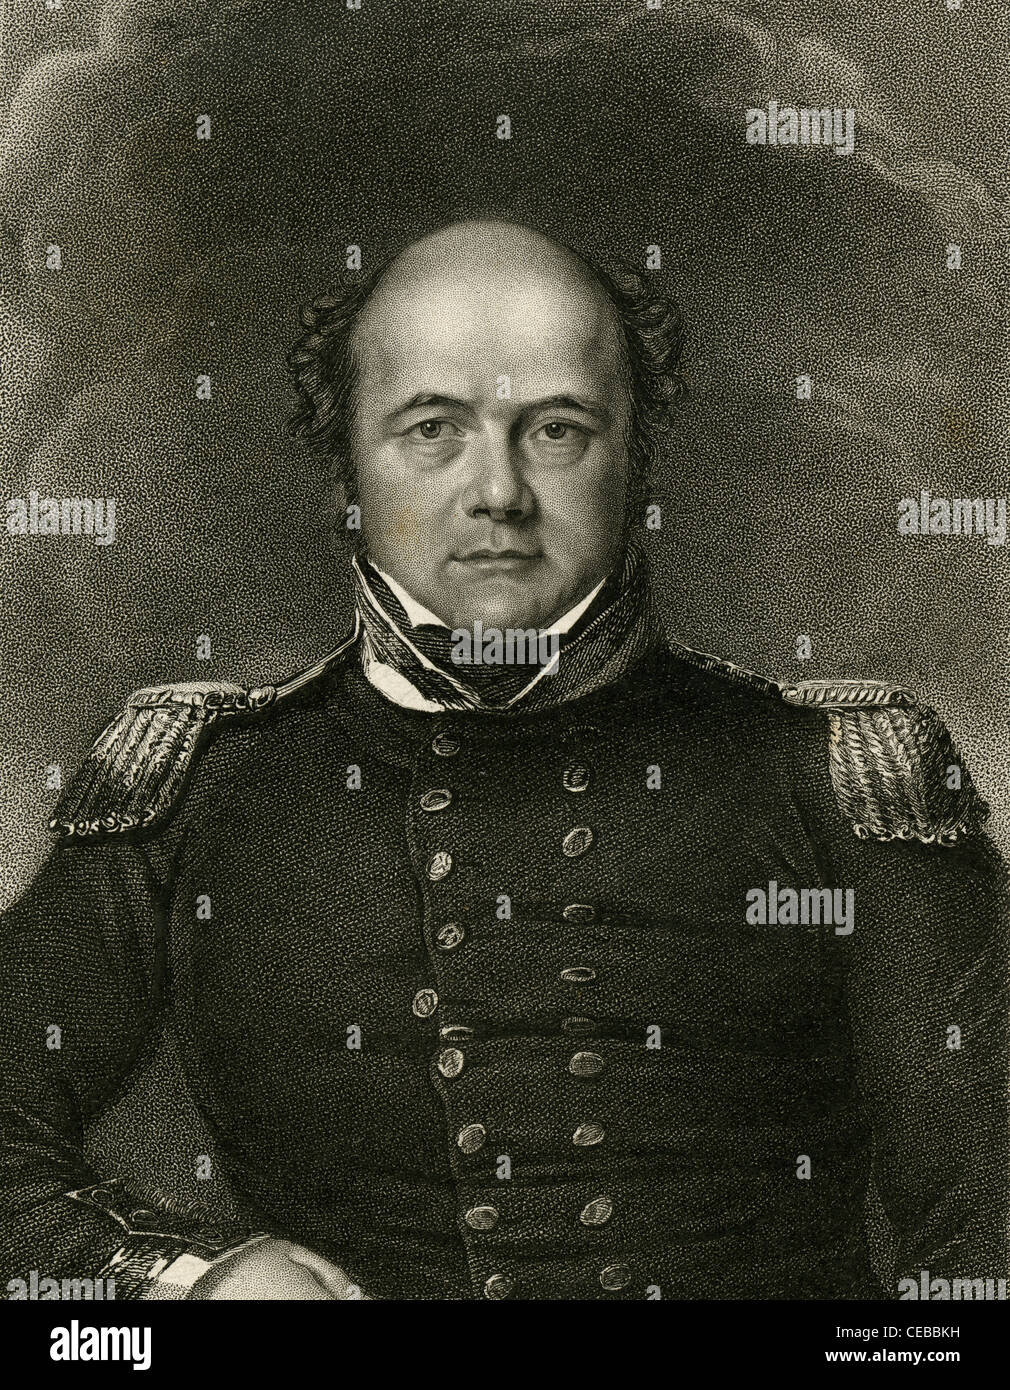 1830-Gravur von Konteradmiral John Franklin. Stockfoto